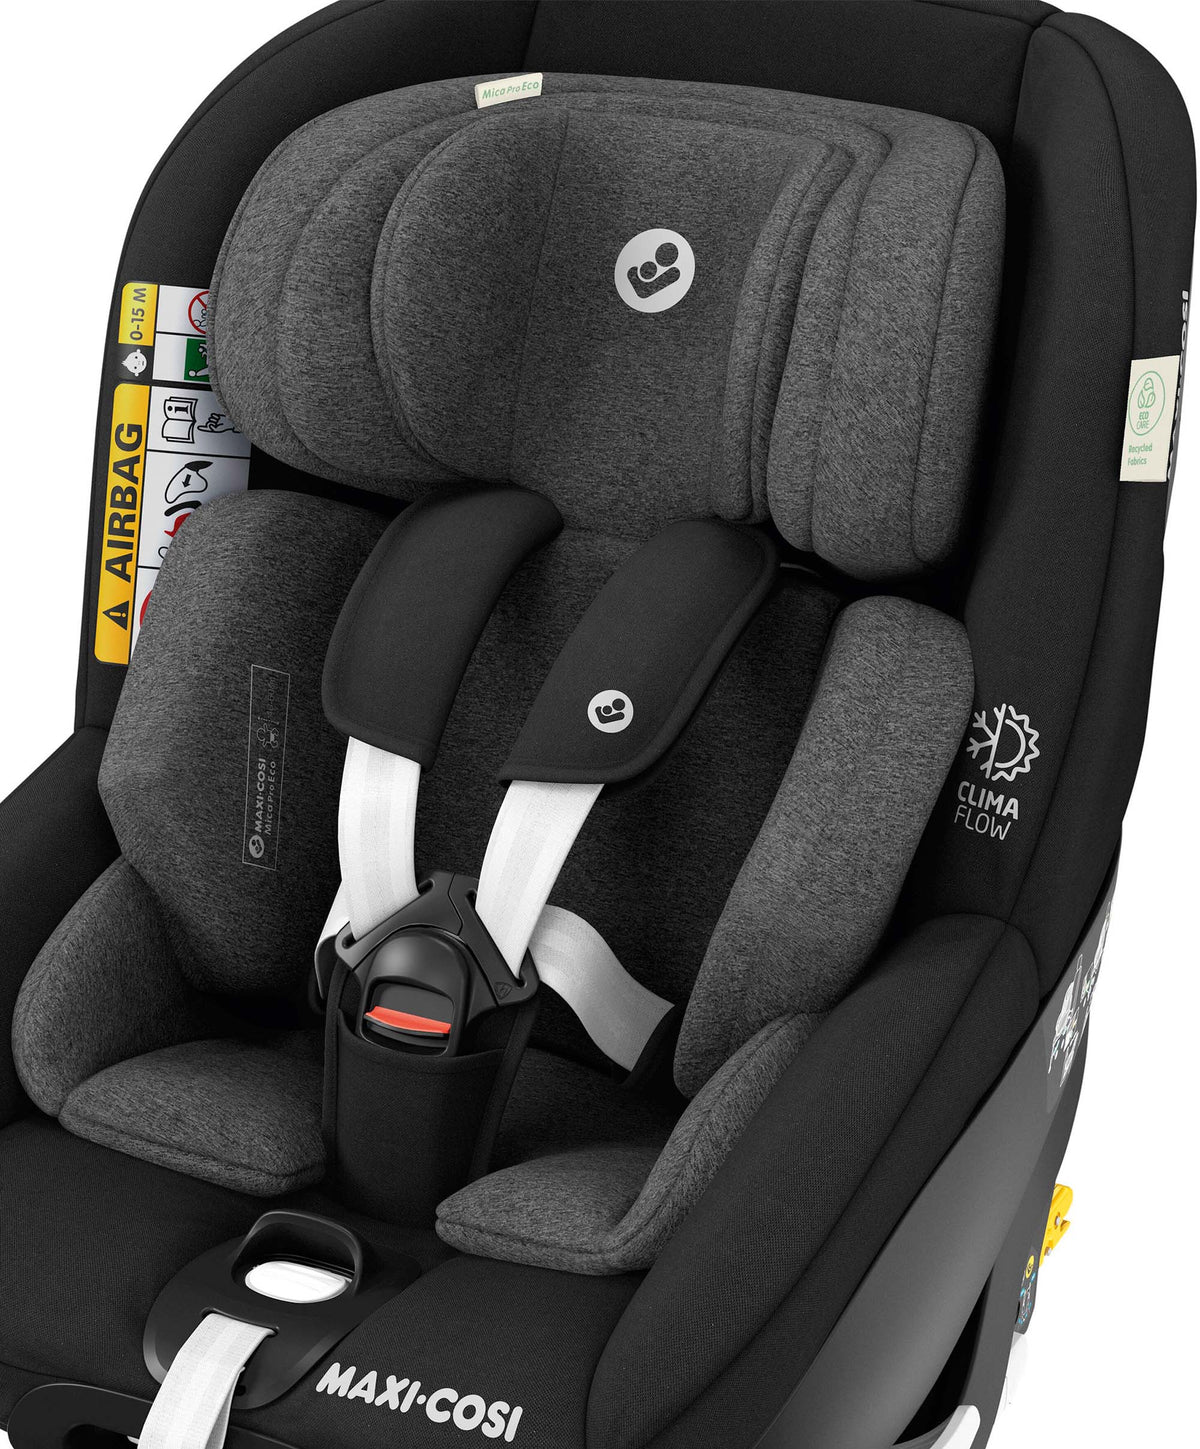 Maxi-Cosi Mica car seat review